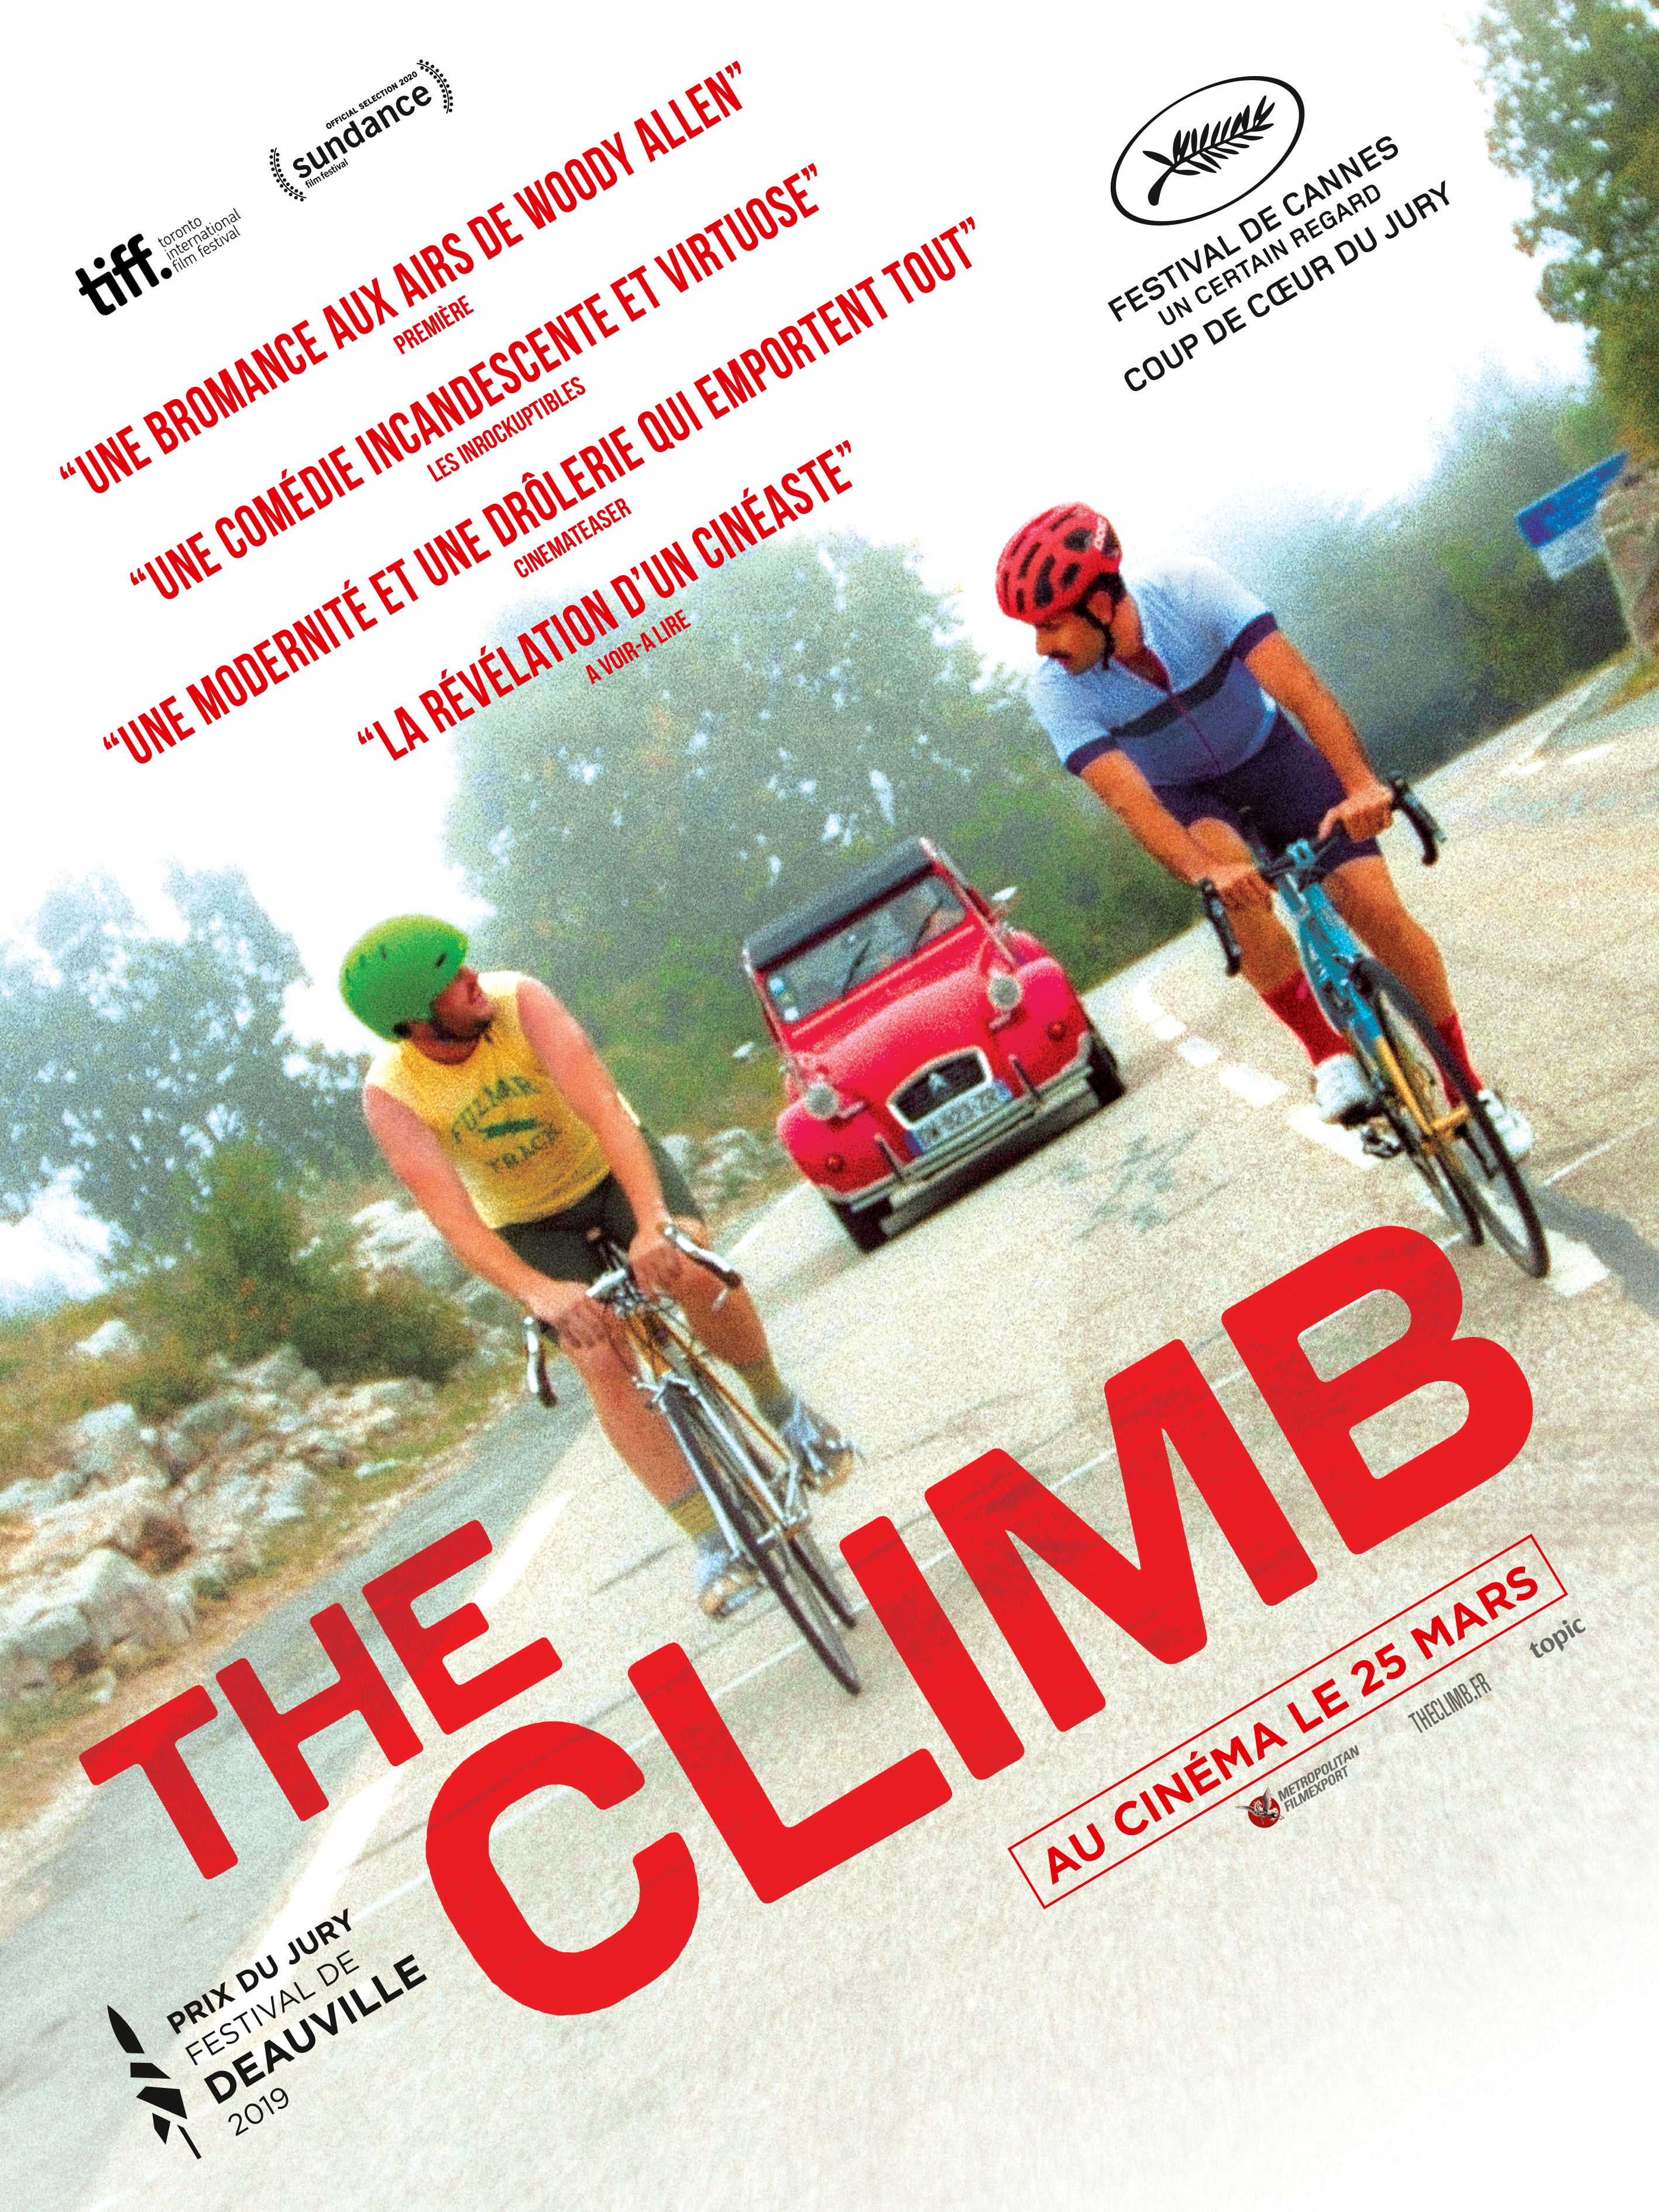 « THE CLIMB » de Michael Angelo Covino – La chronique sur un vélo
!